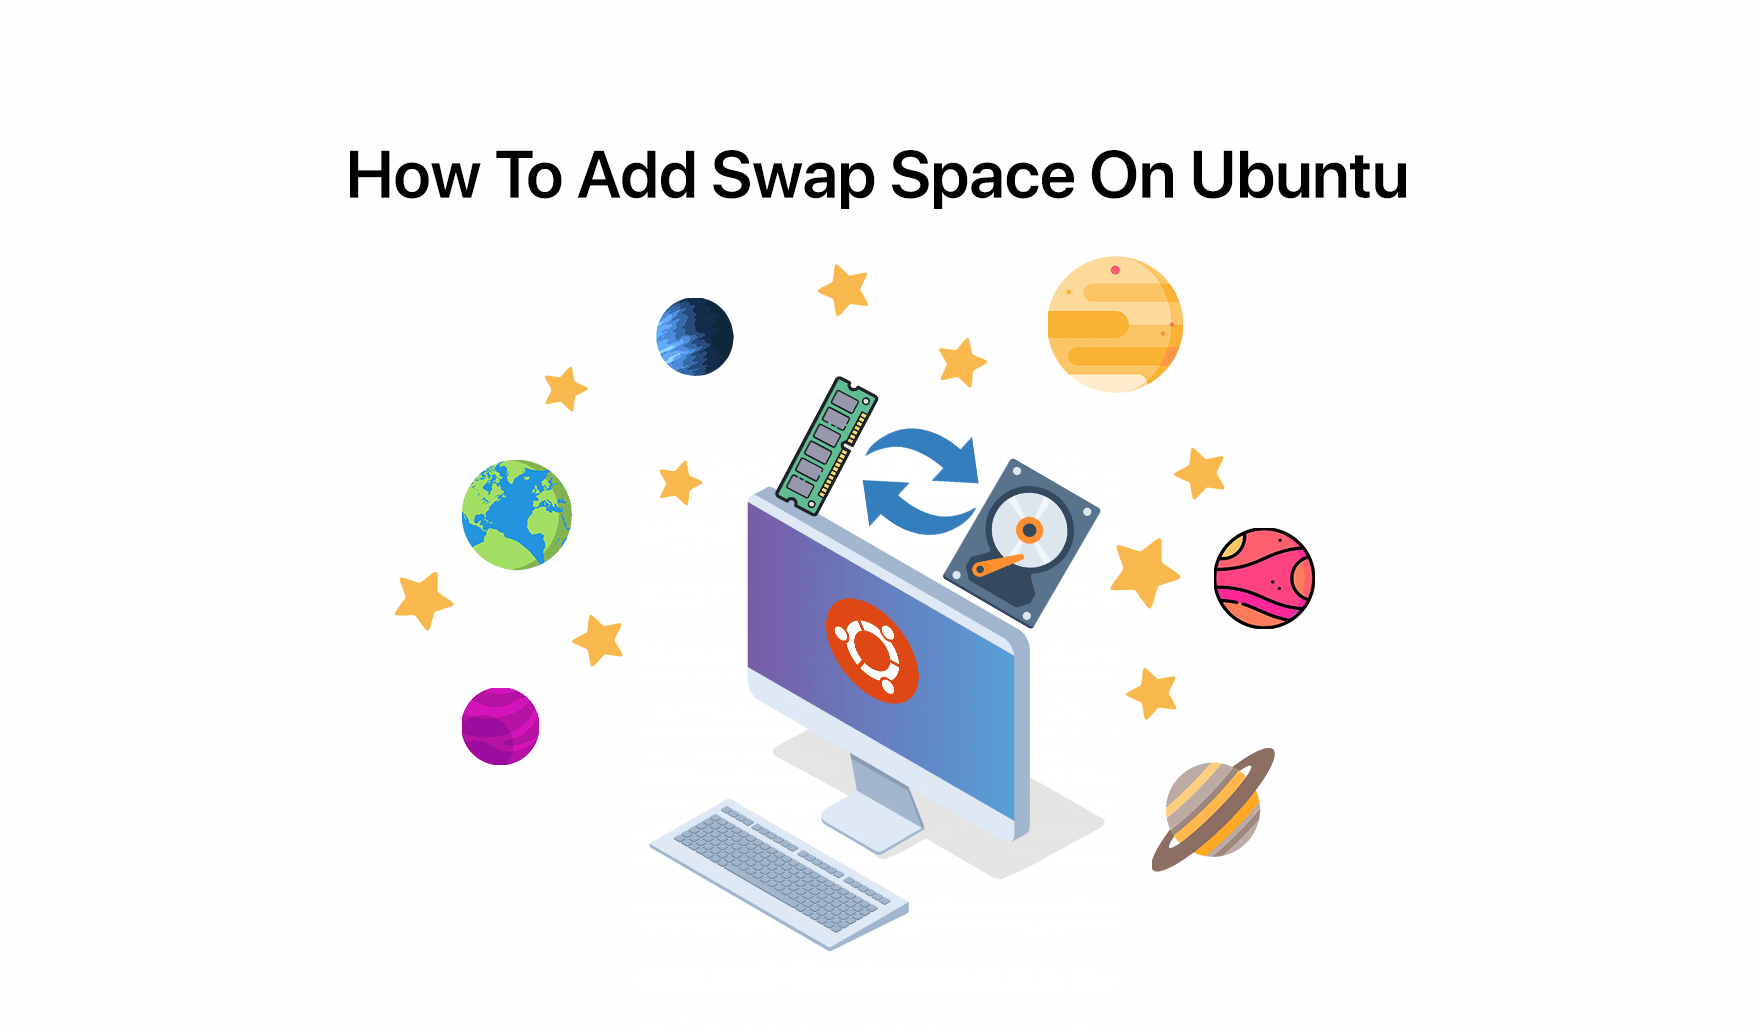 Add Swap Space on Ubuntu